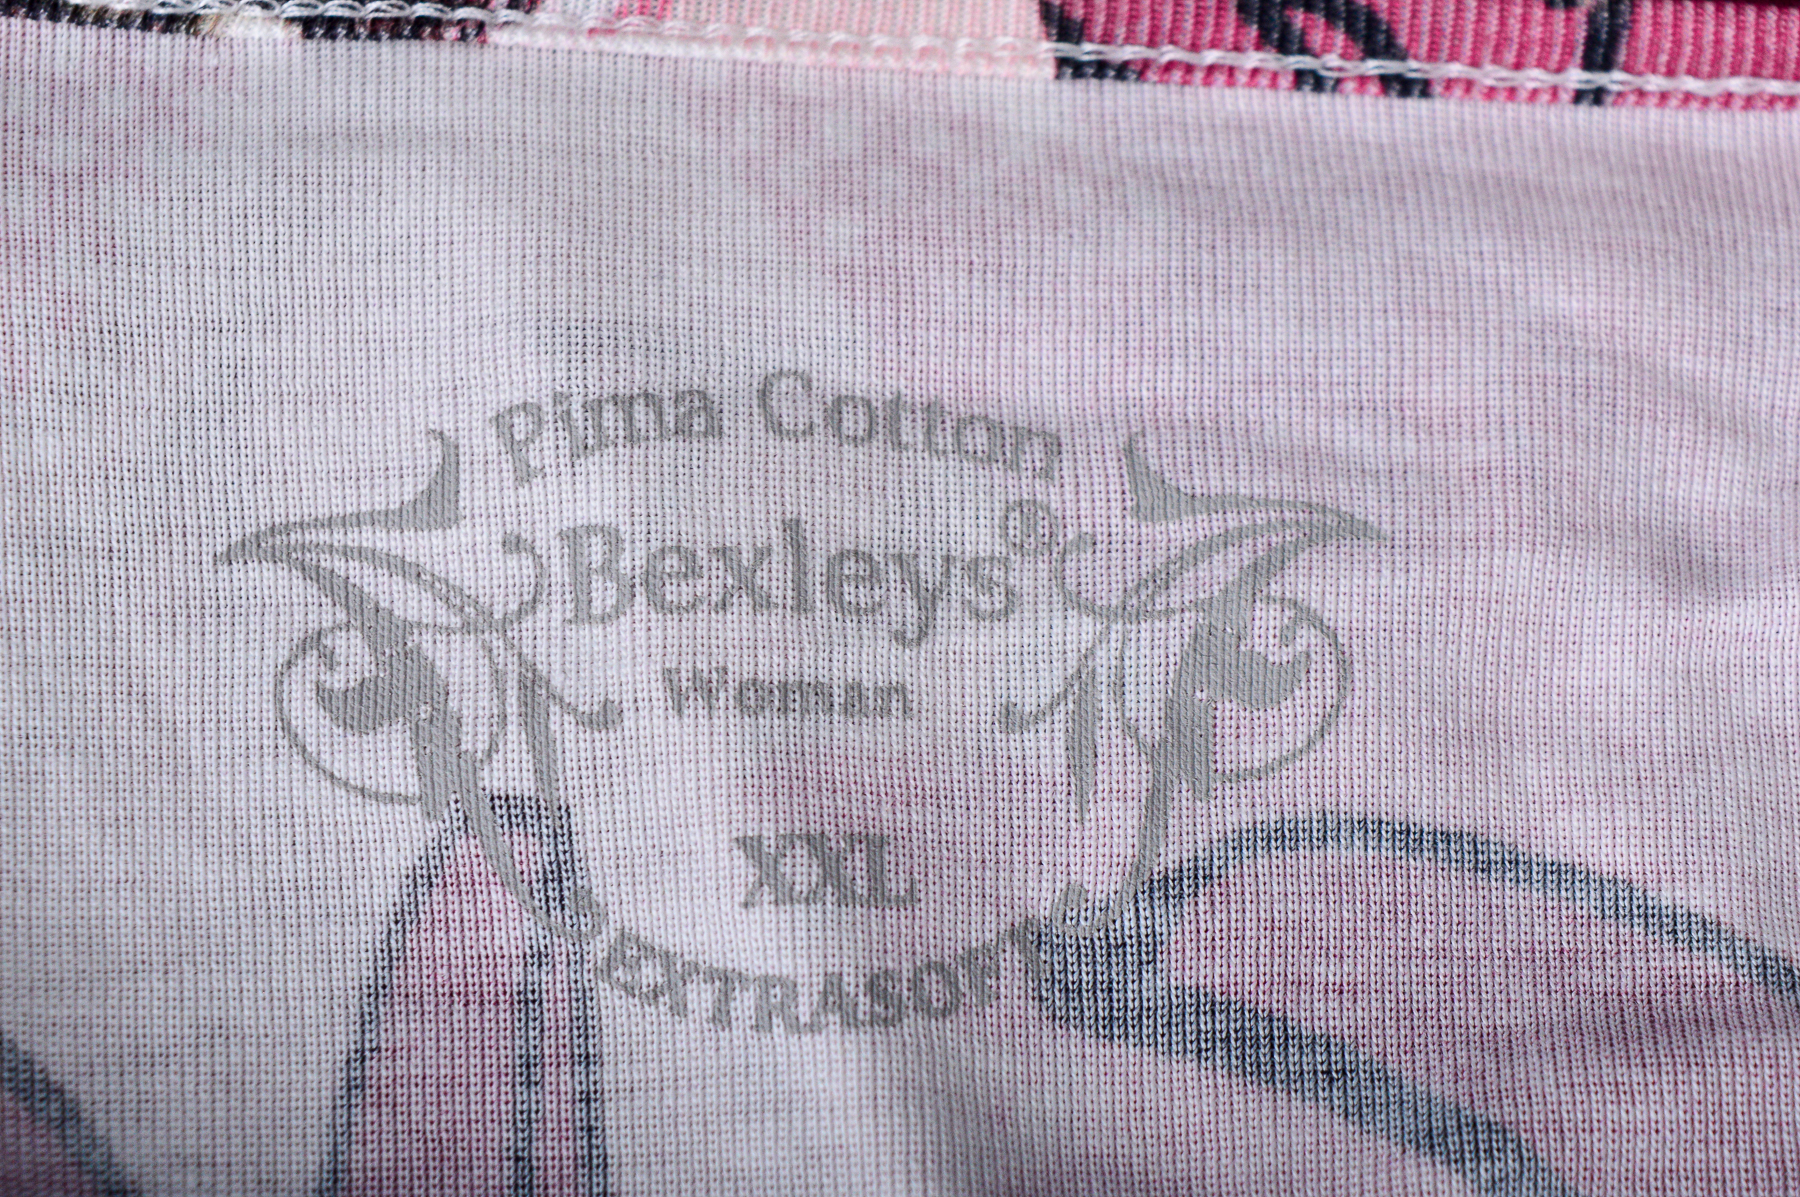 Bluza de damă - Bexleys - 2